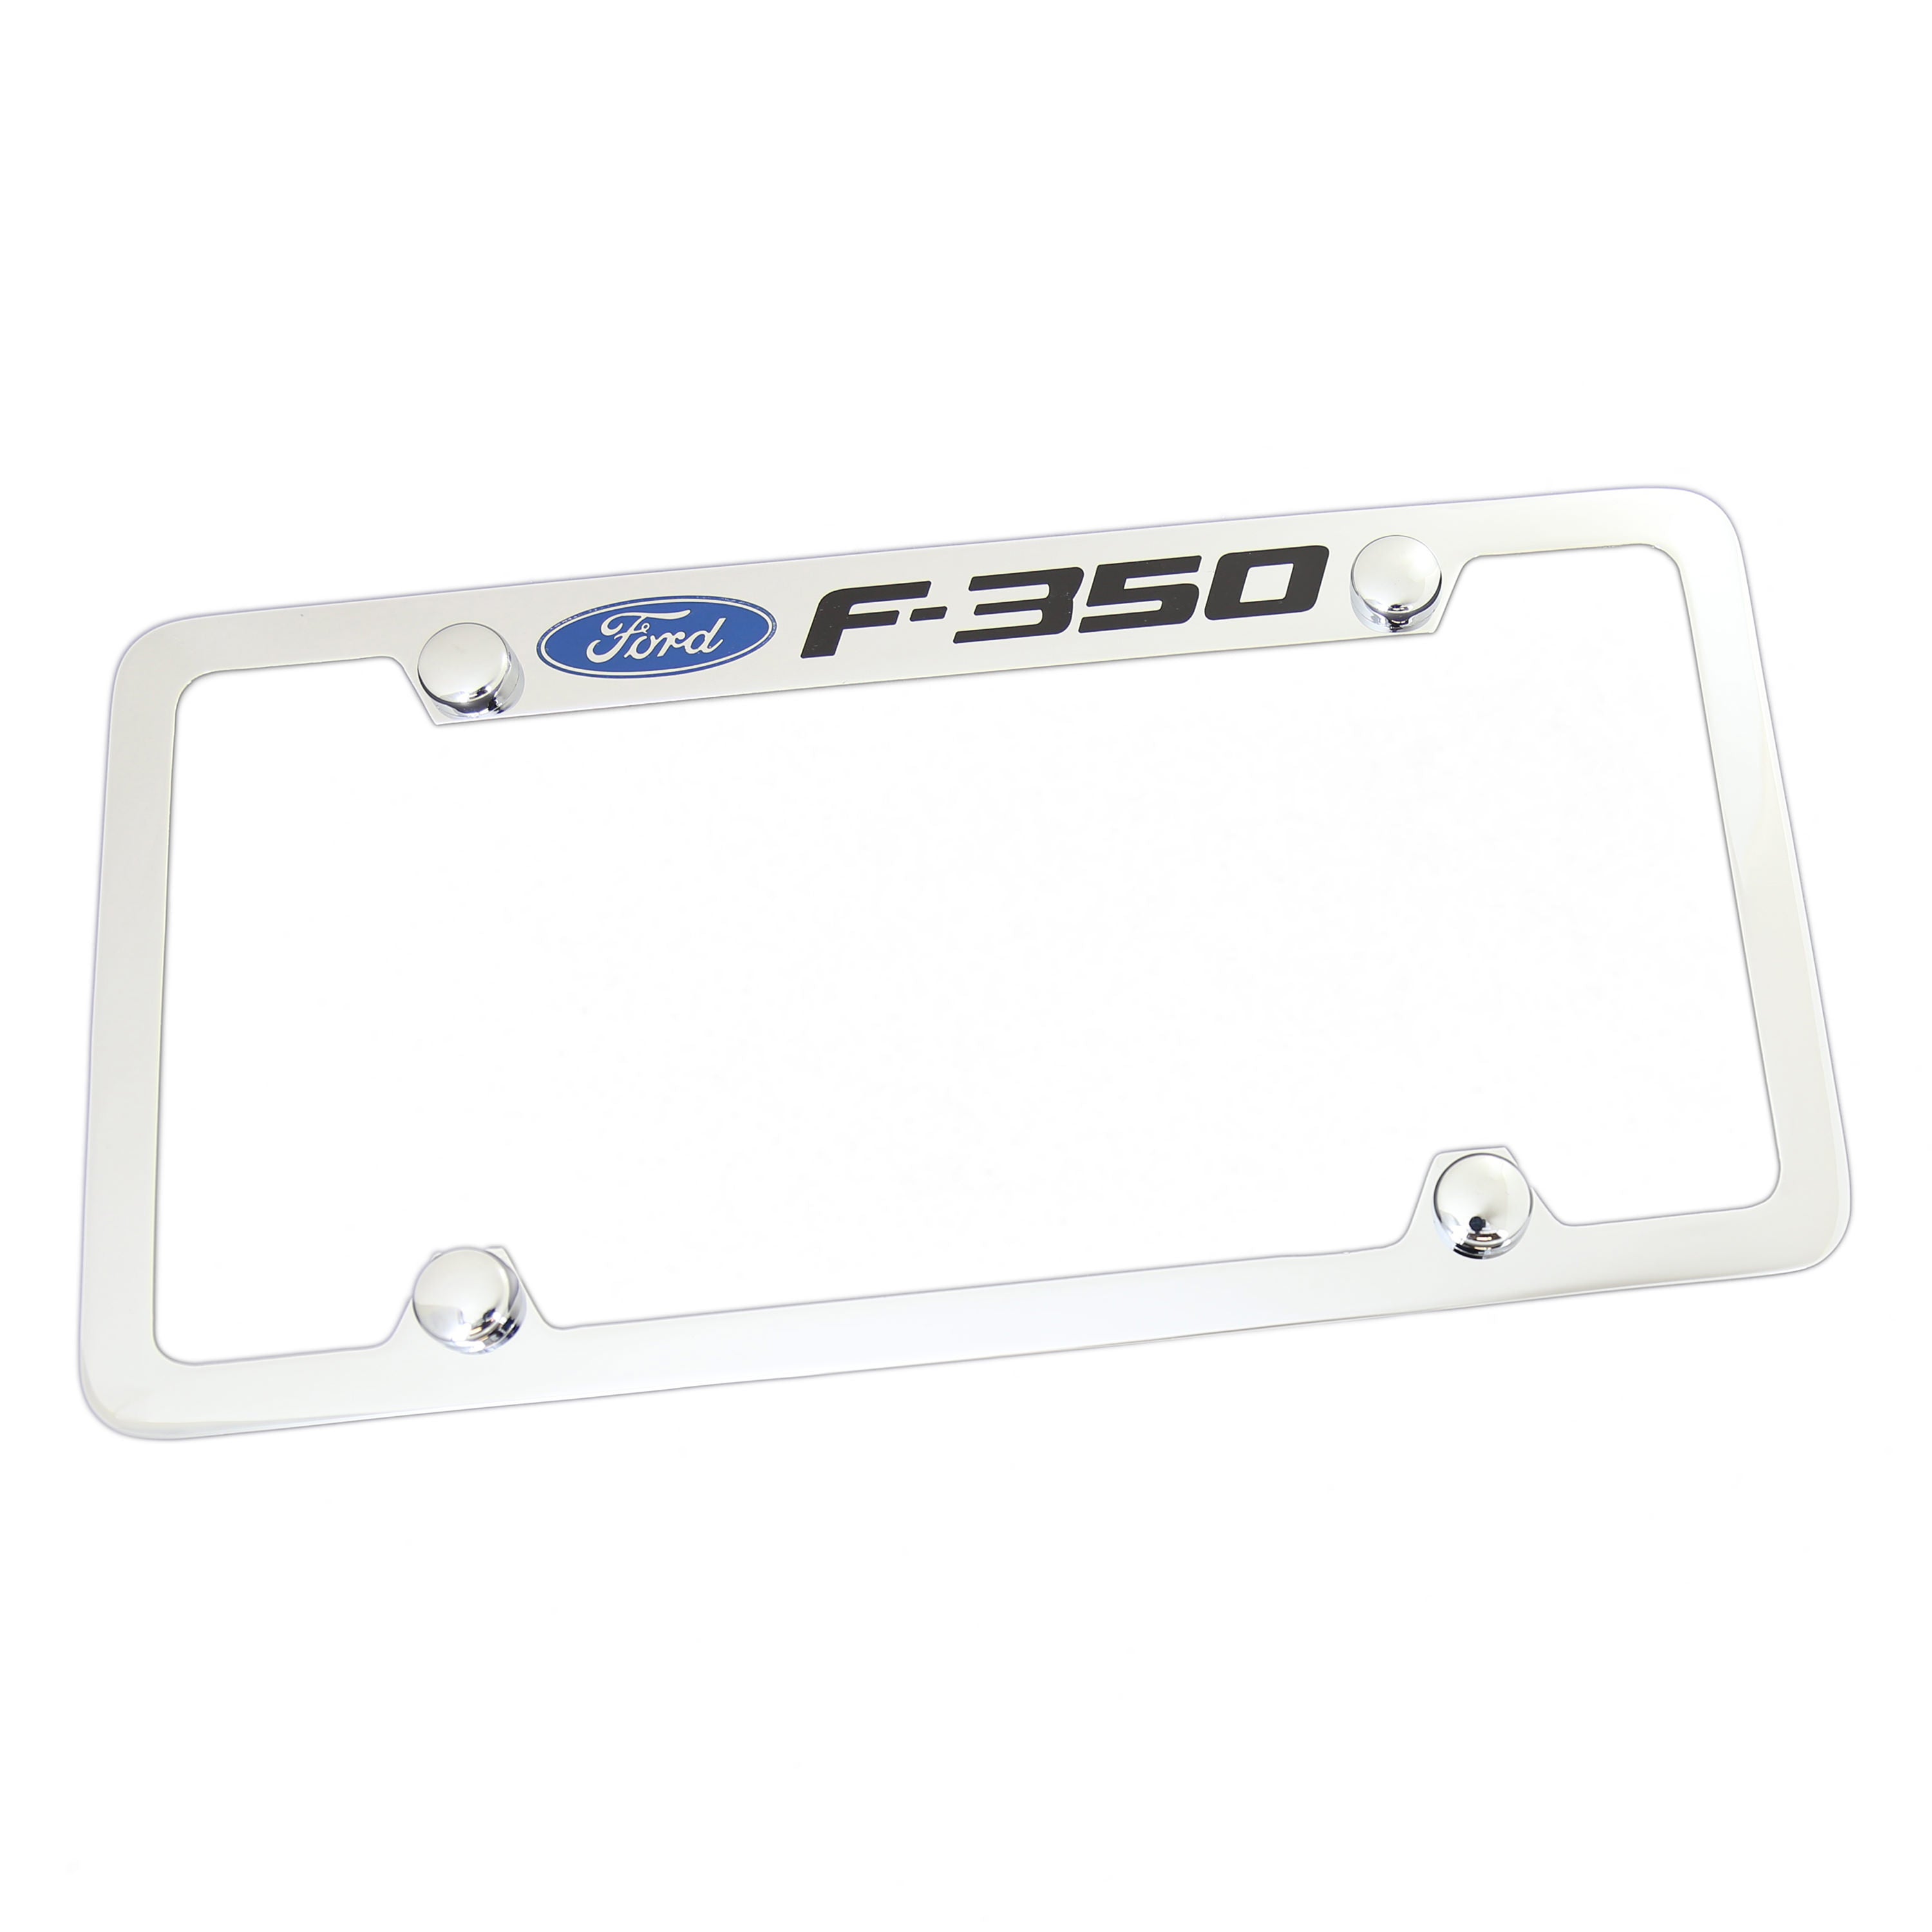 Ford F350 License Plate Frame With 4 Holes (Chrome) - Custom Werks